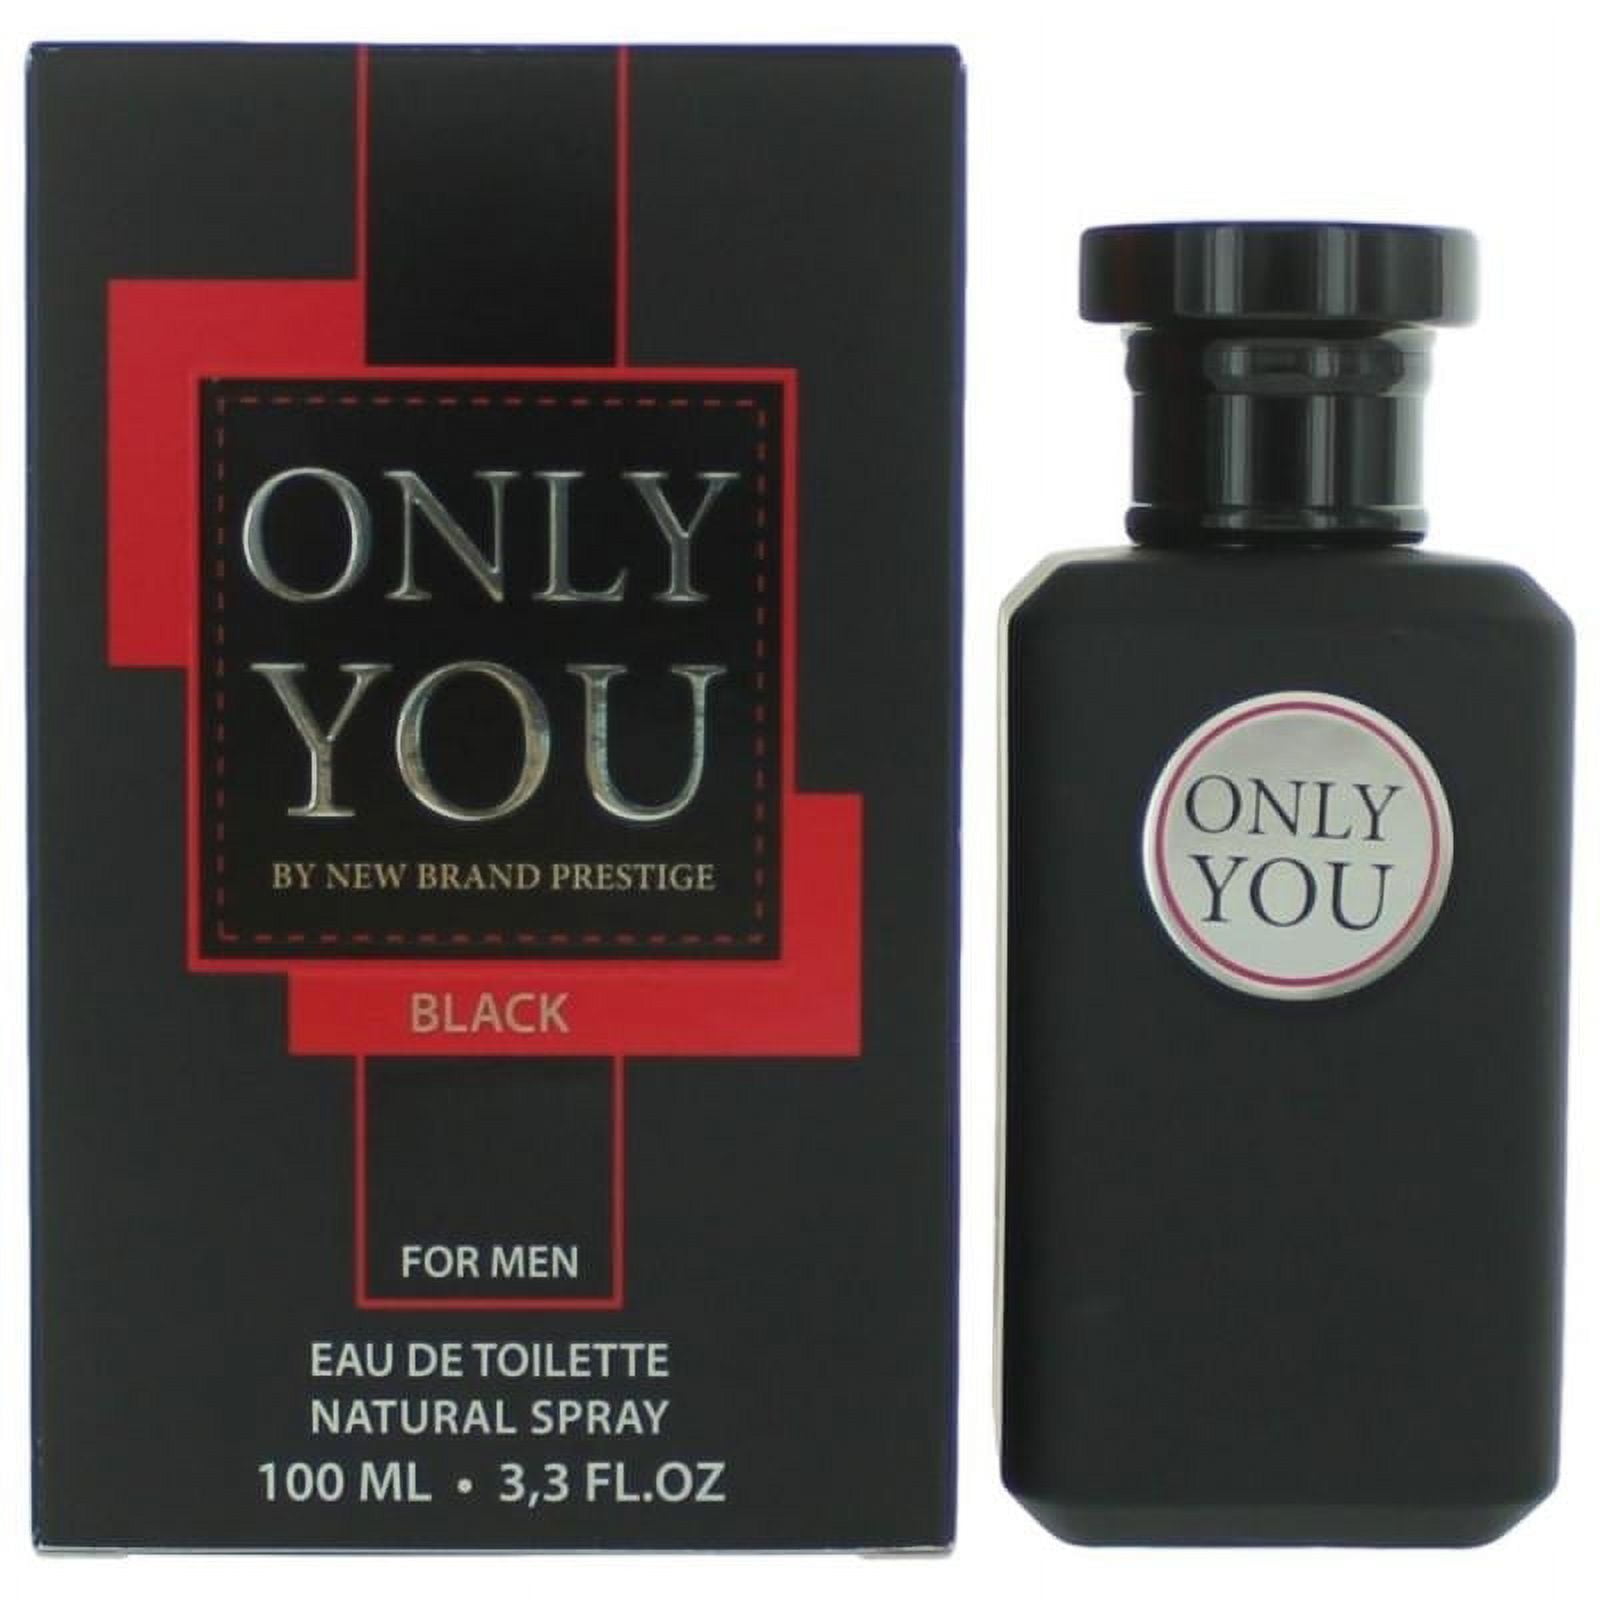 Black Ice Perfume Fragrance (Unisex) type – Unique Oils